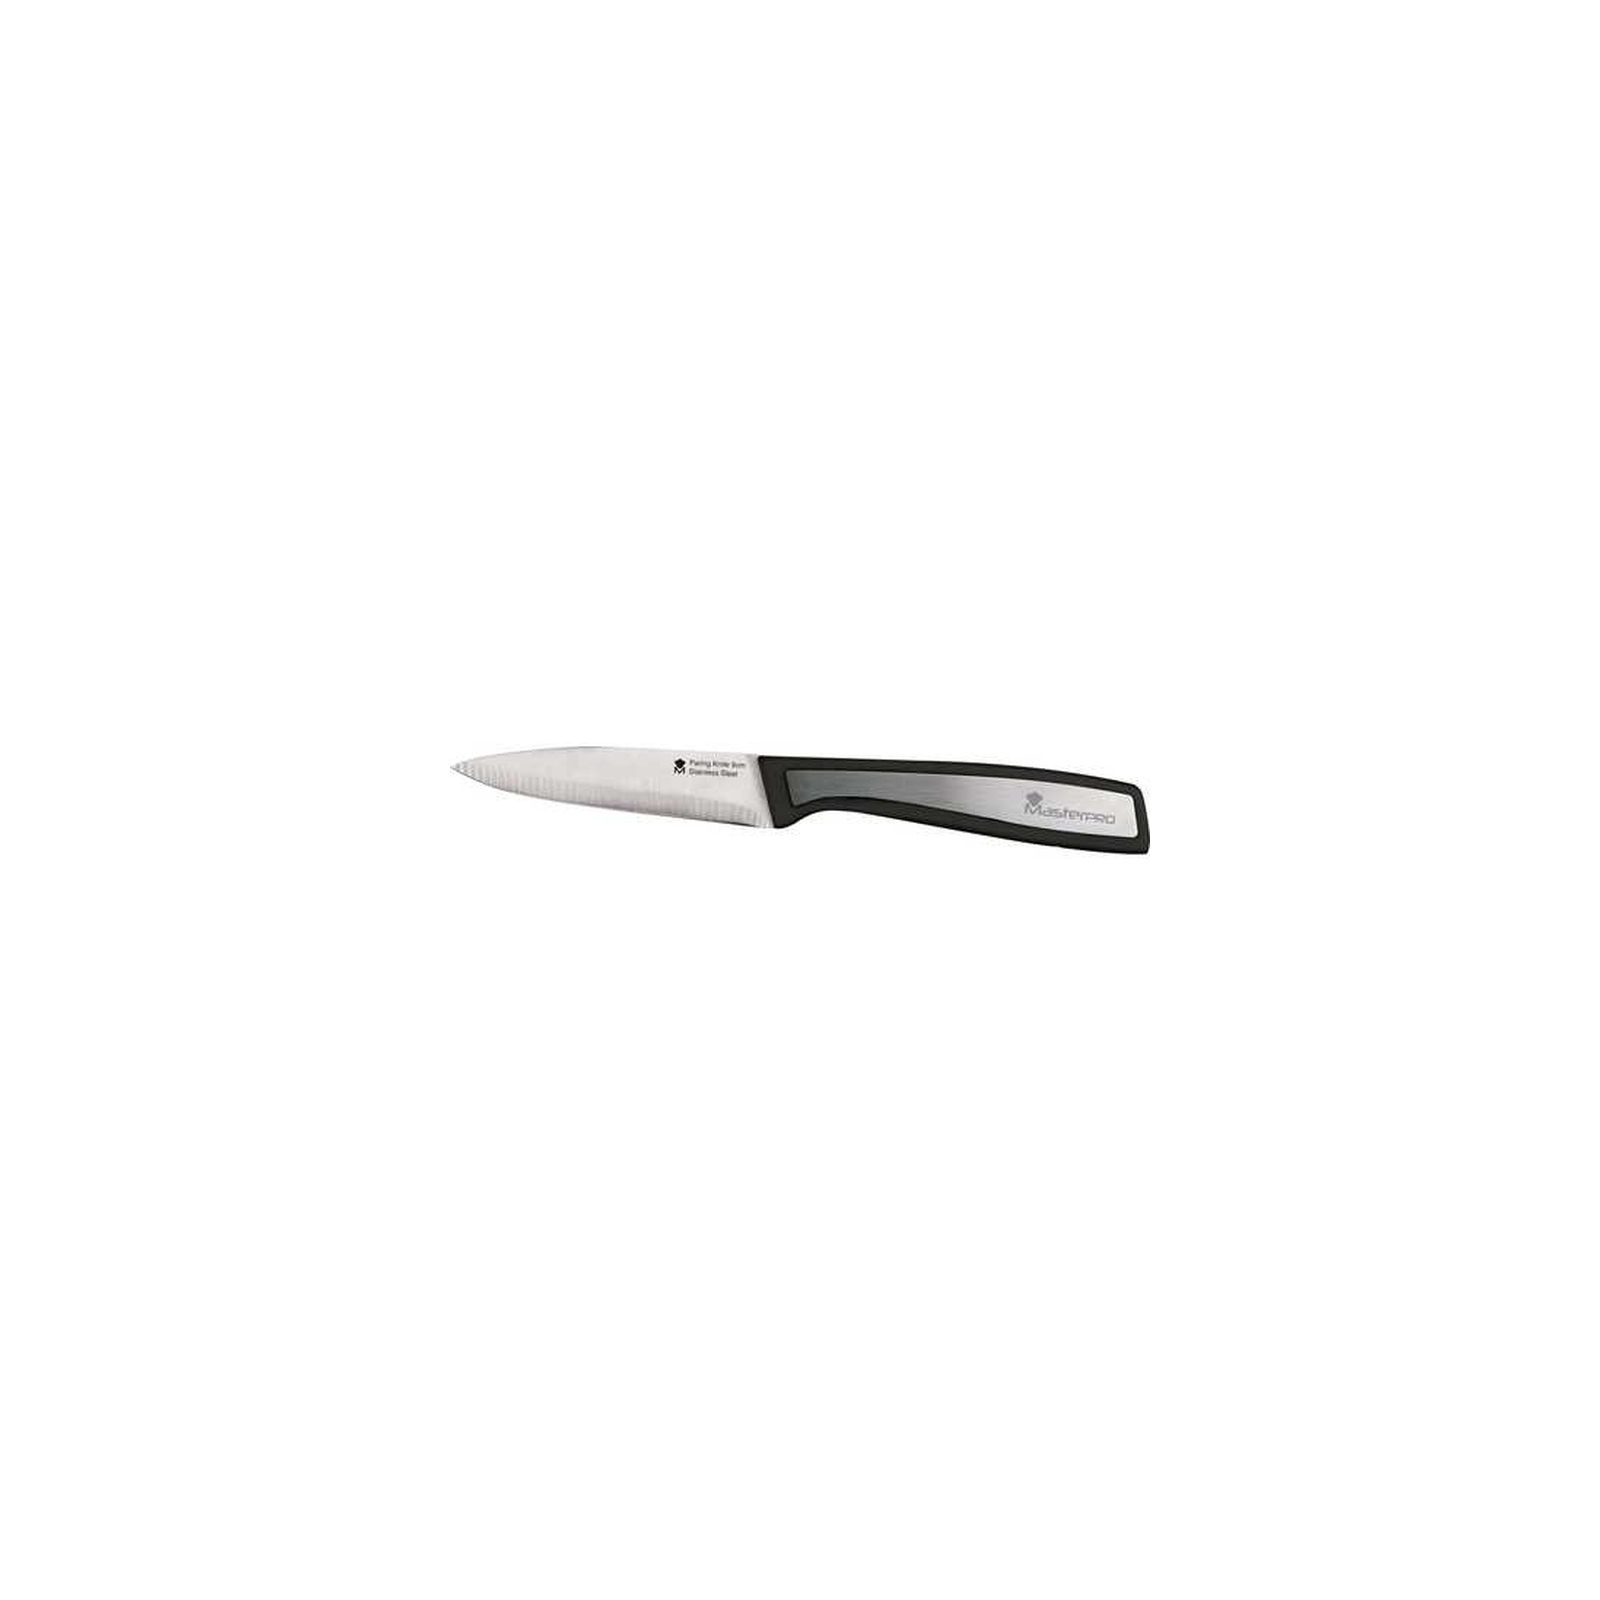 Кухонный нож MasterPro Sharp міні Шеф 12 см (BGMP-4117)